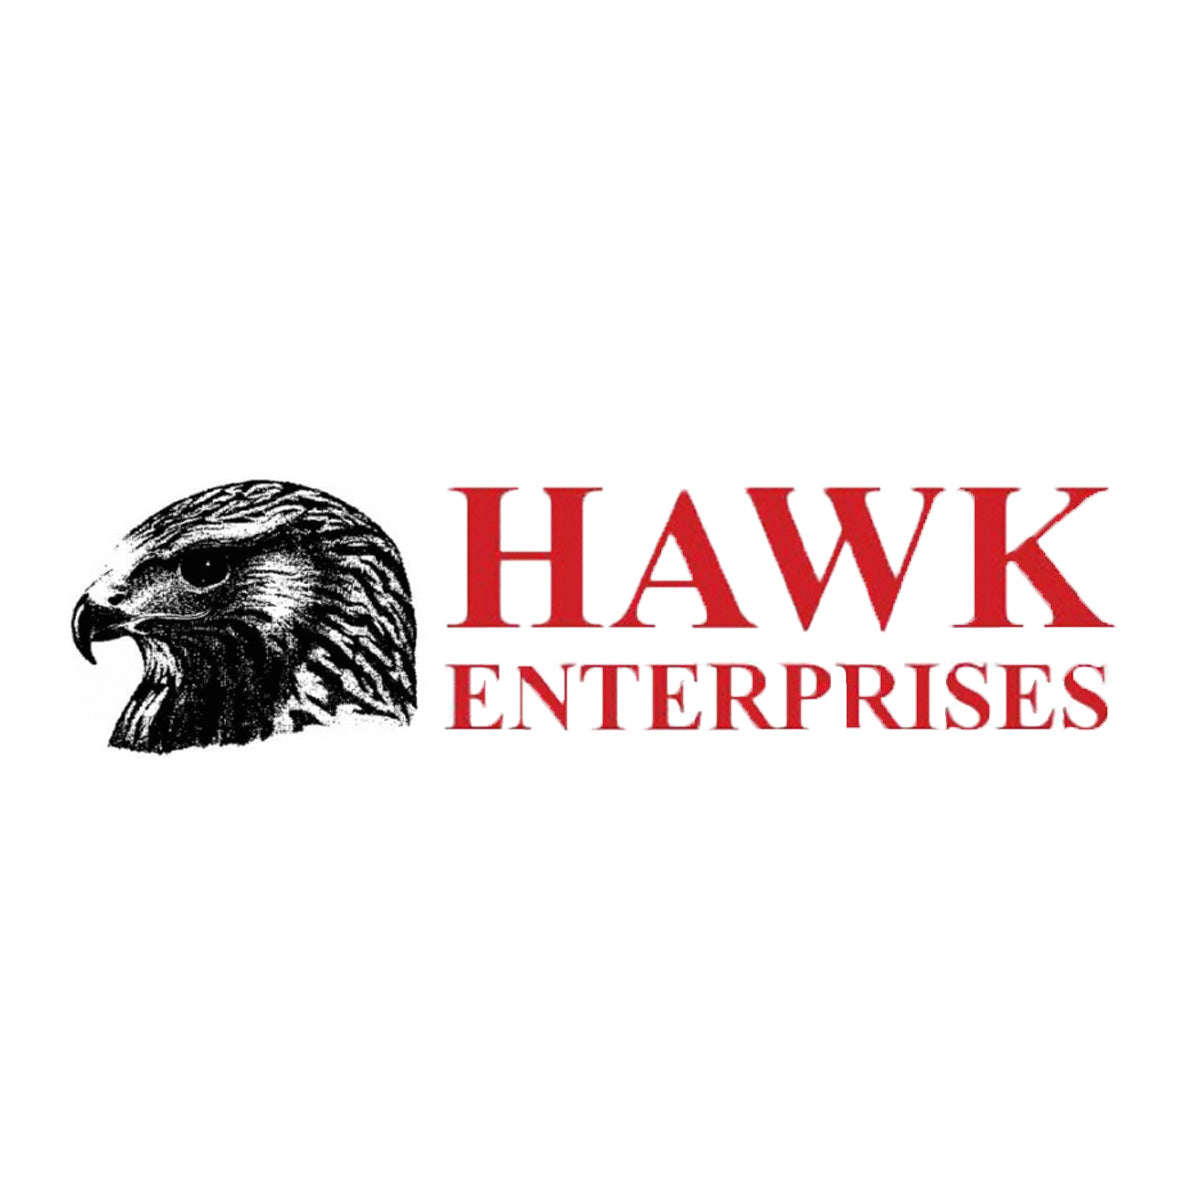 Hawk Enterprises, Hawk Buffers, Hawk Floor Machines